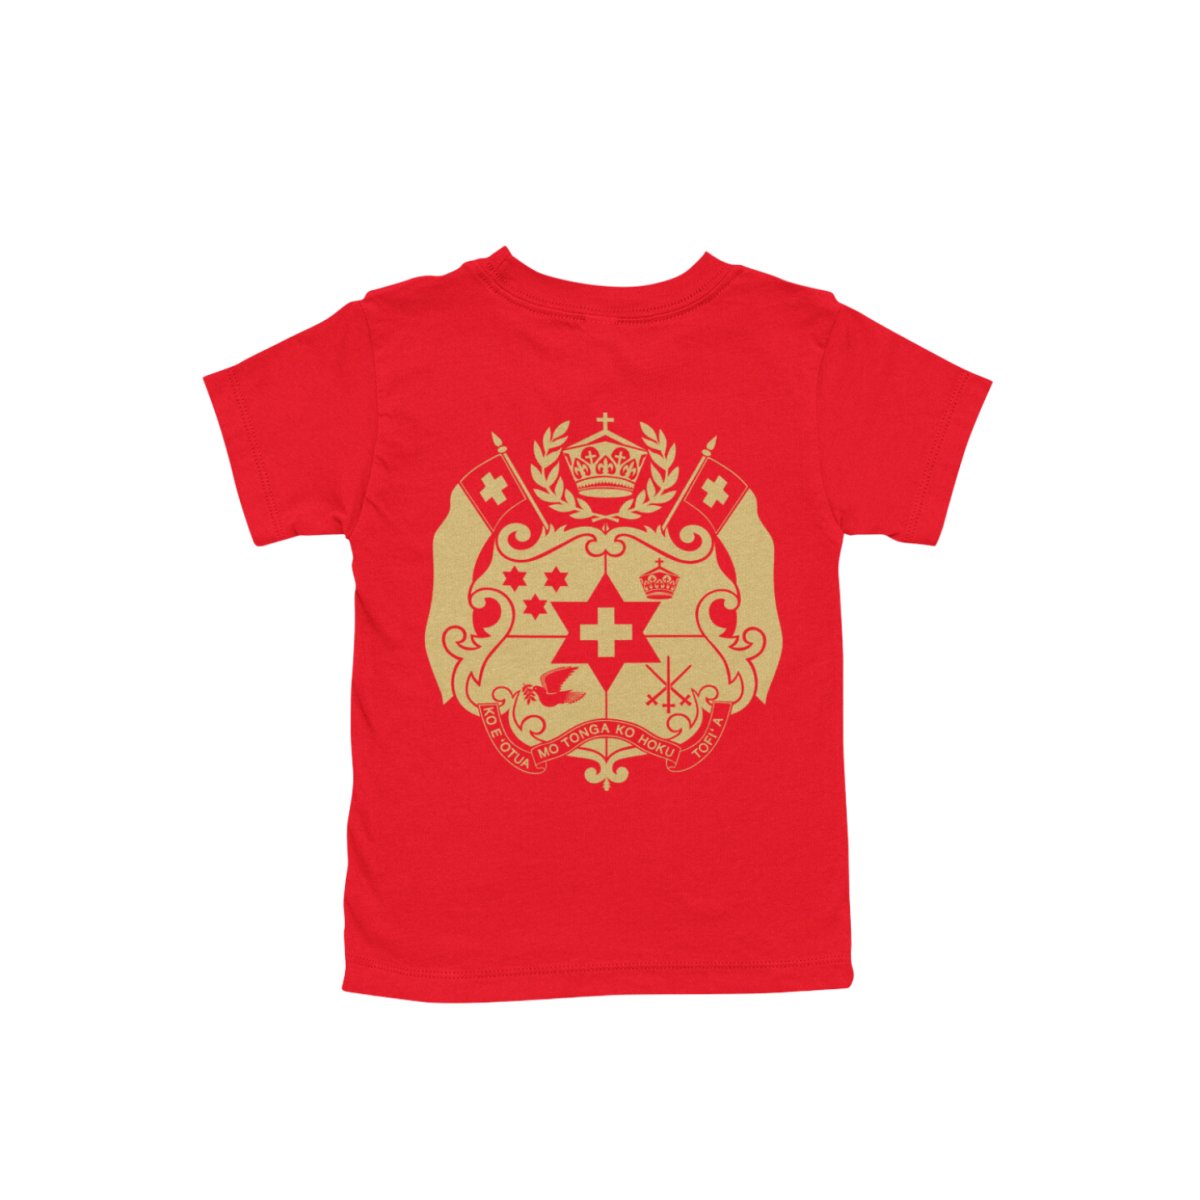 TONGA The Friendly Islands T-shirt - Kids - Nesian Kulture